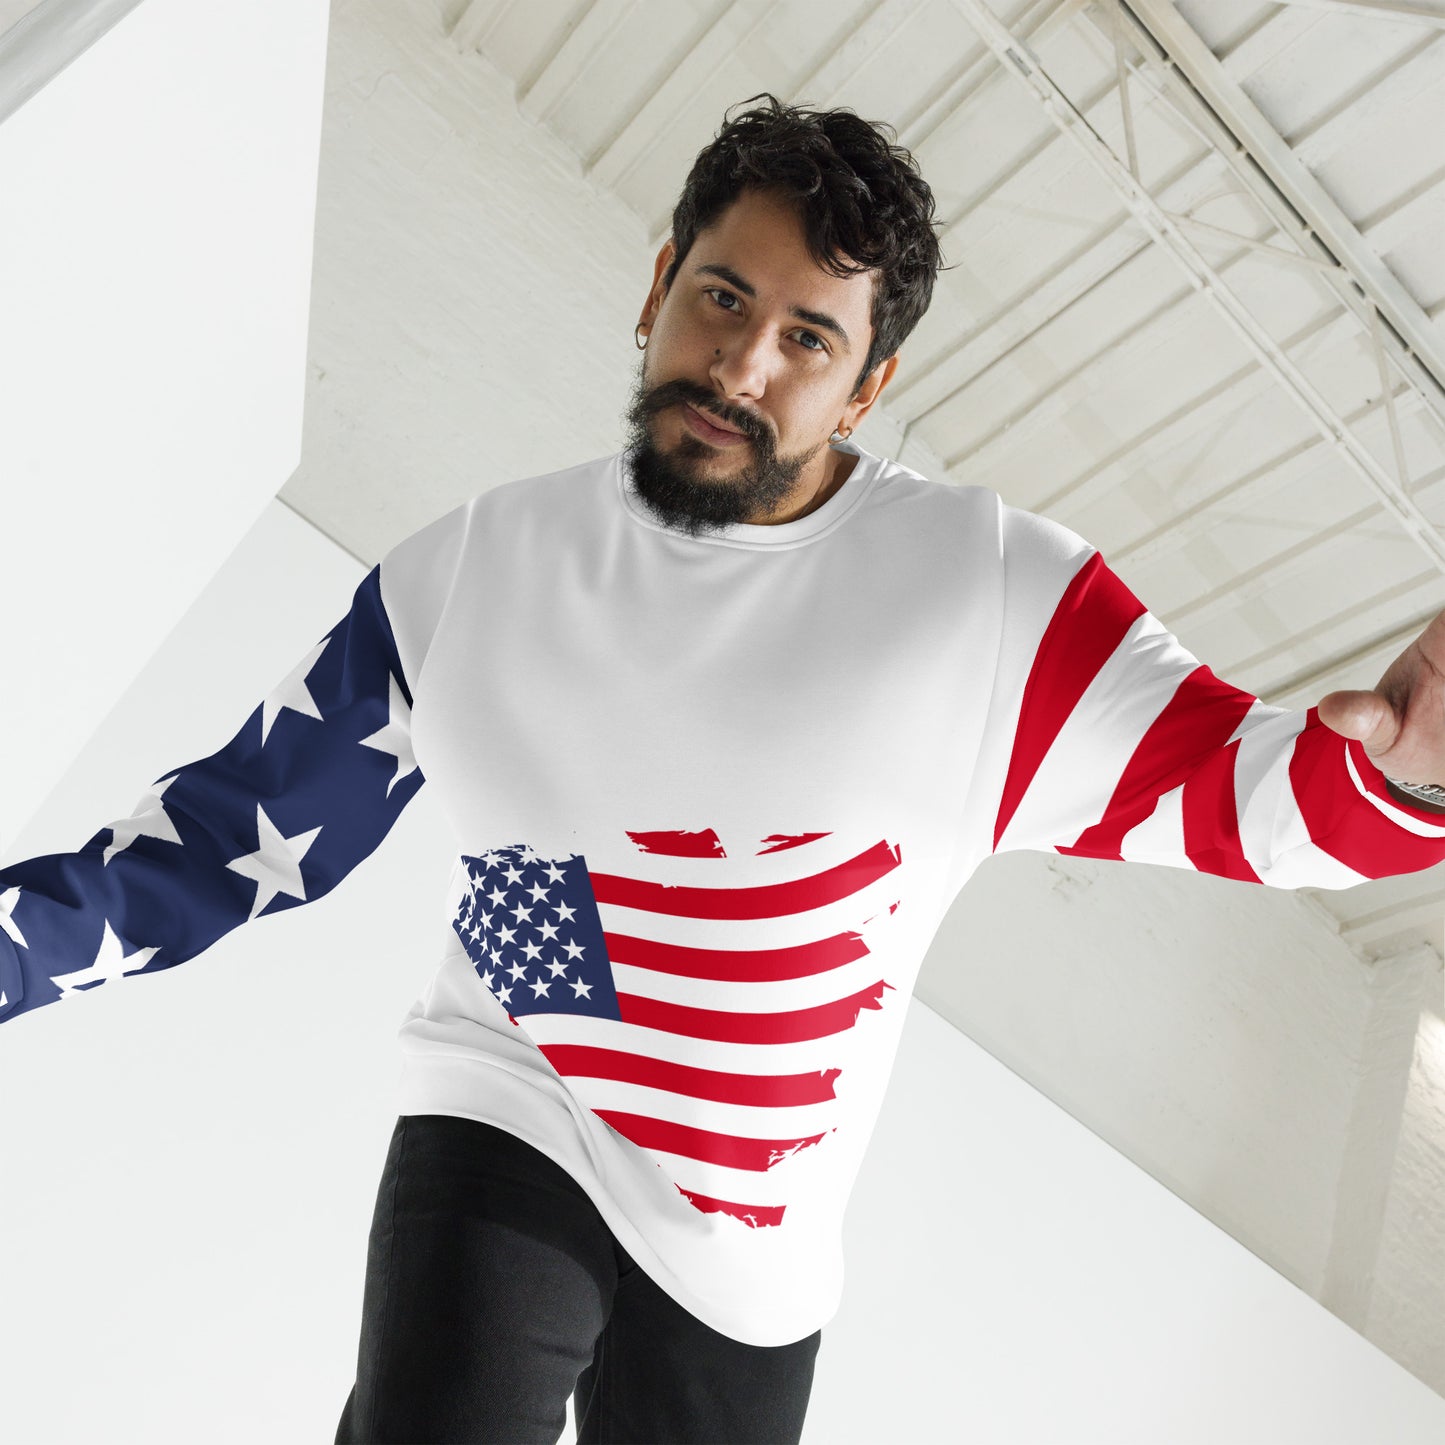 USA Flag Print Sweatshirt